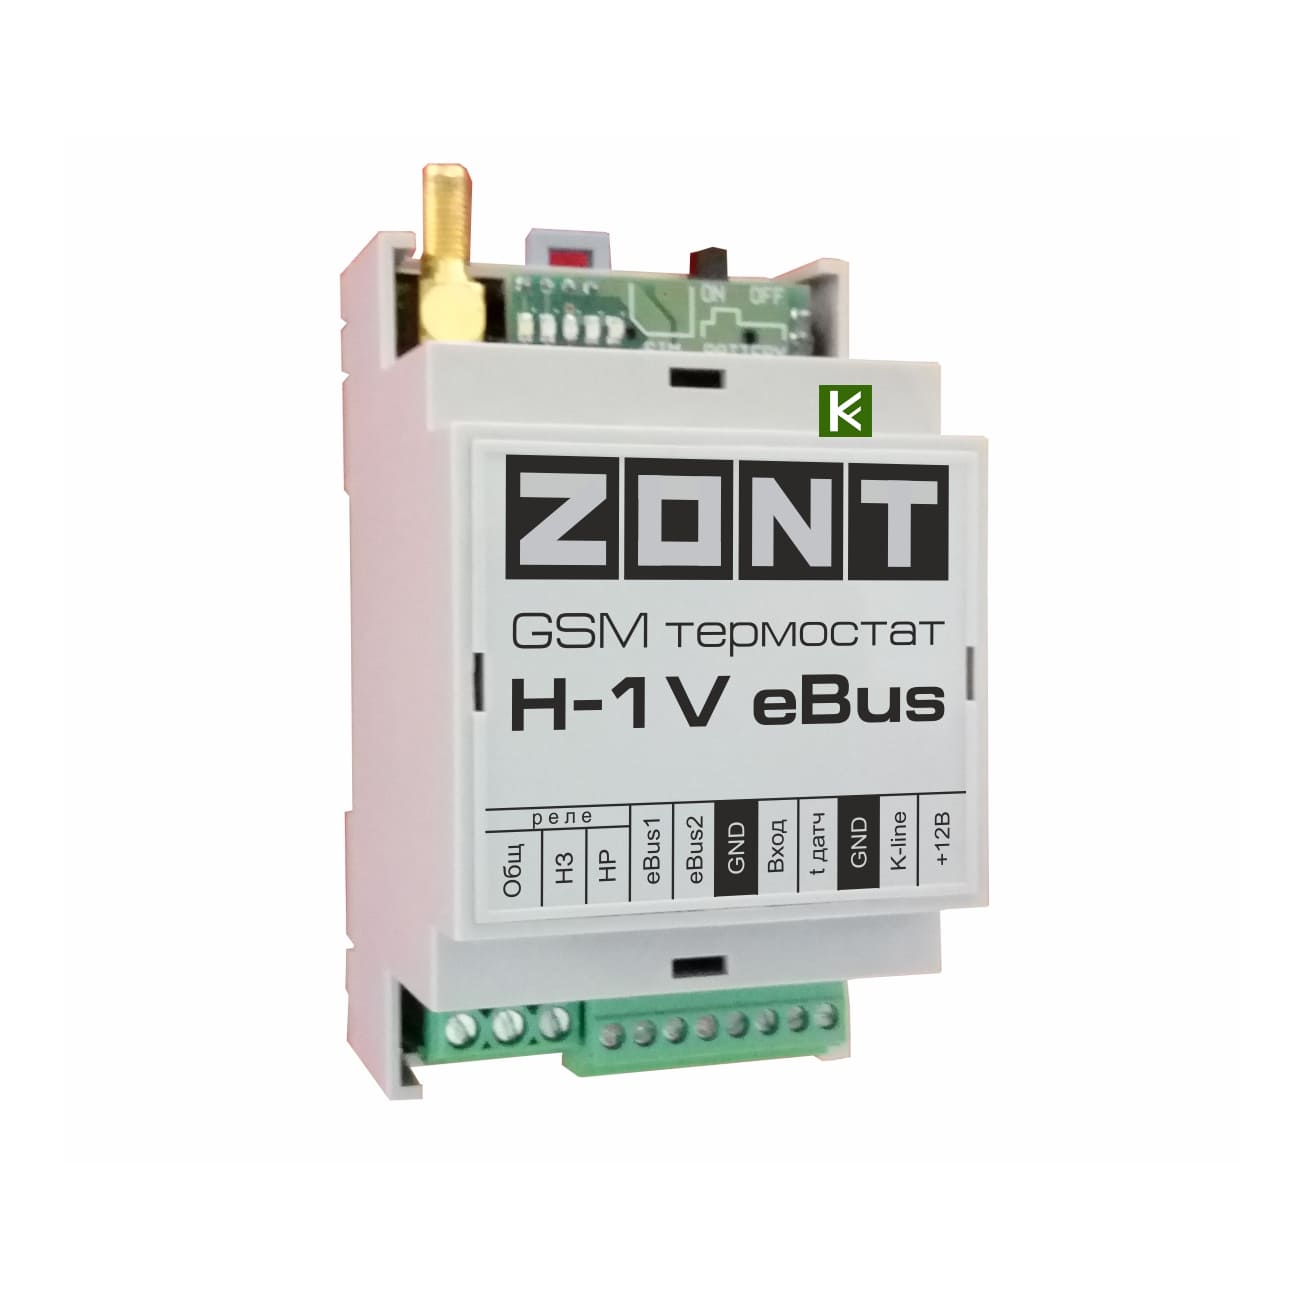 Zont v. Zont-h1v EBUS GSM-термостат. Protherm блок дистанционного управления котлом GSM-climate Zont h-1v EBUS. GSM-термостат Zont h-1v. GSM-термостат Zont h-1.